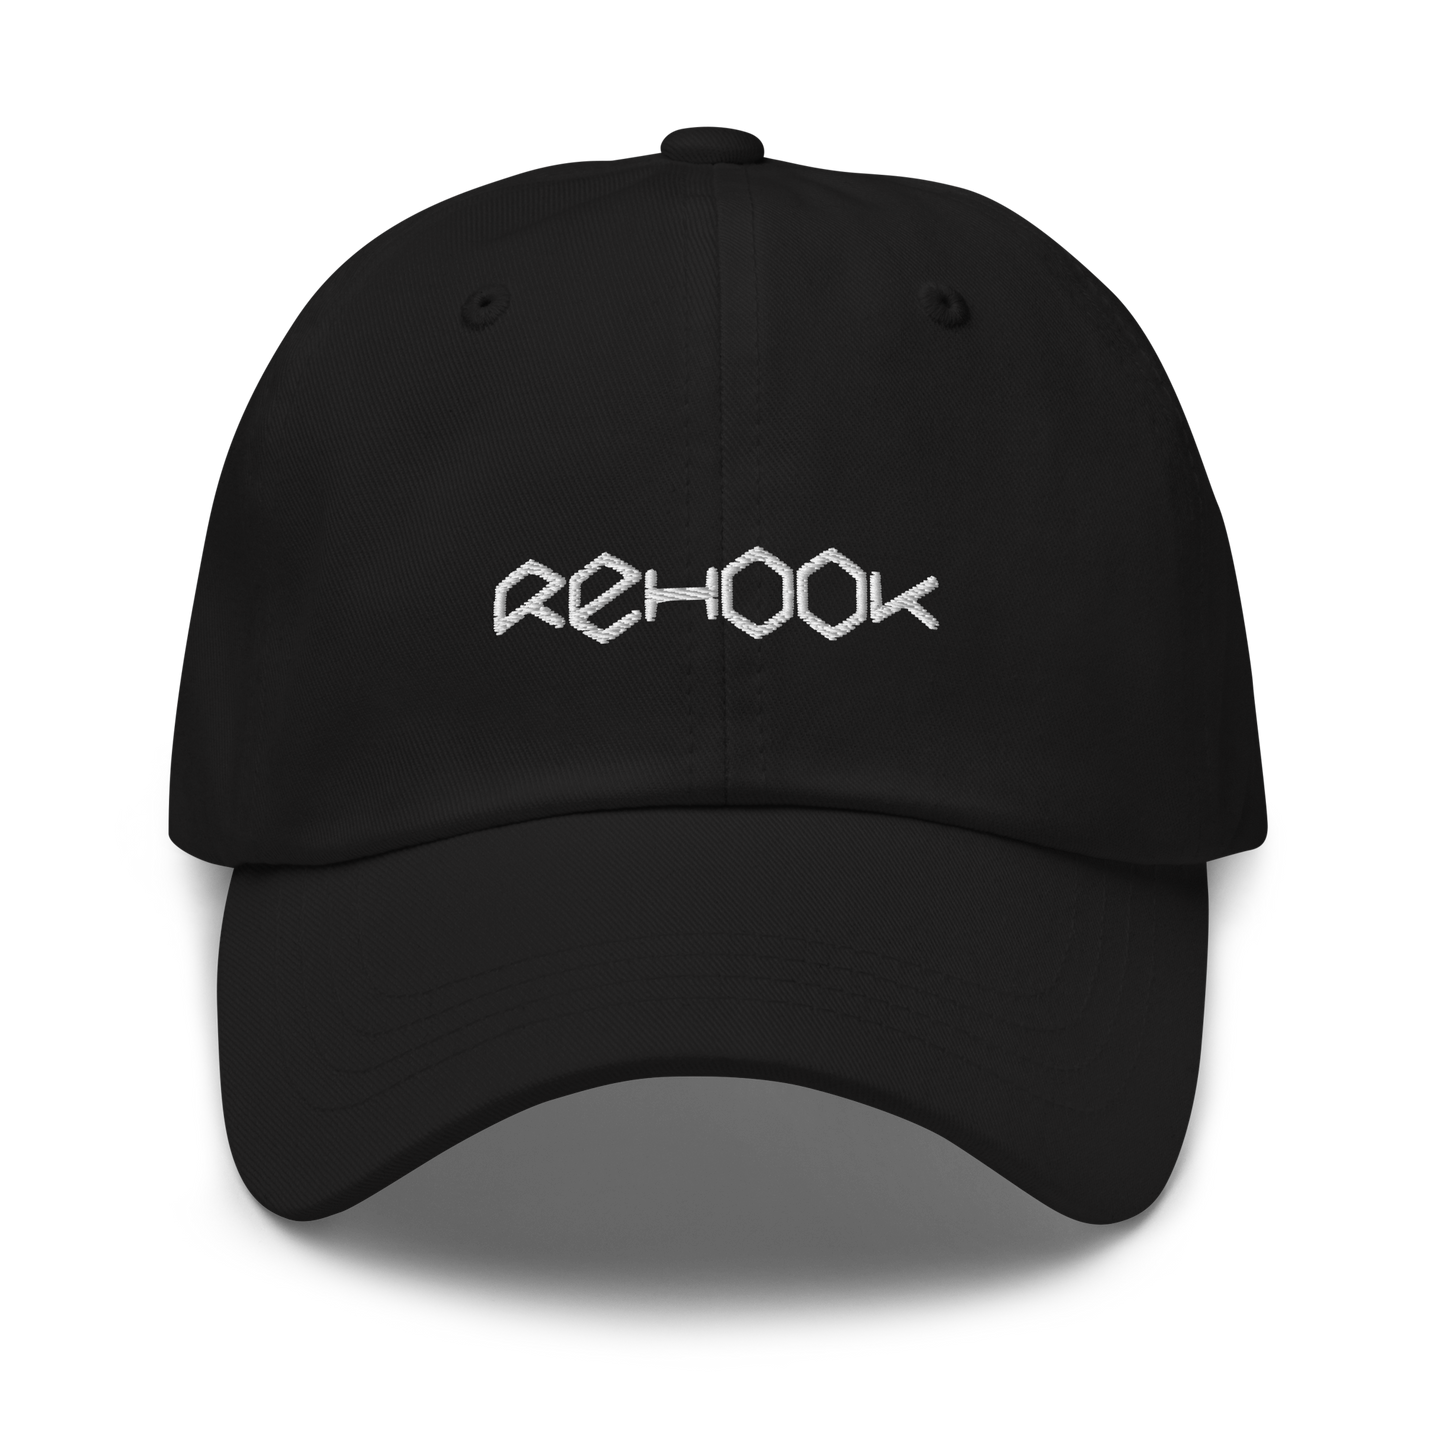 Rehook Adjustable Low-Profile Cap